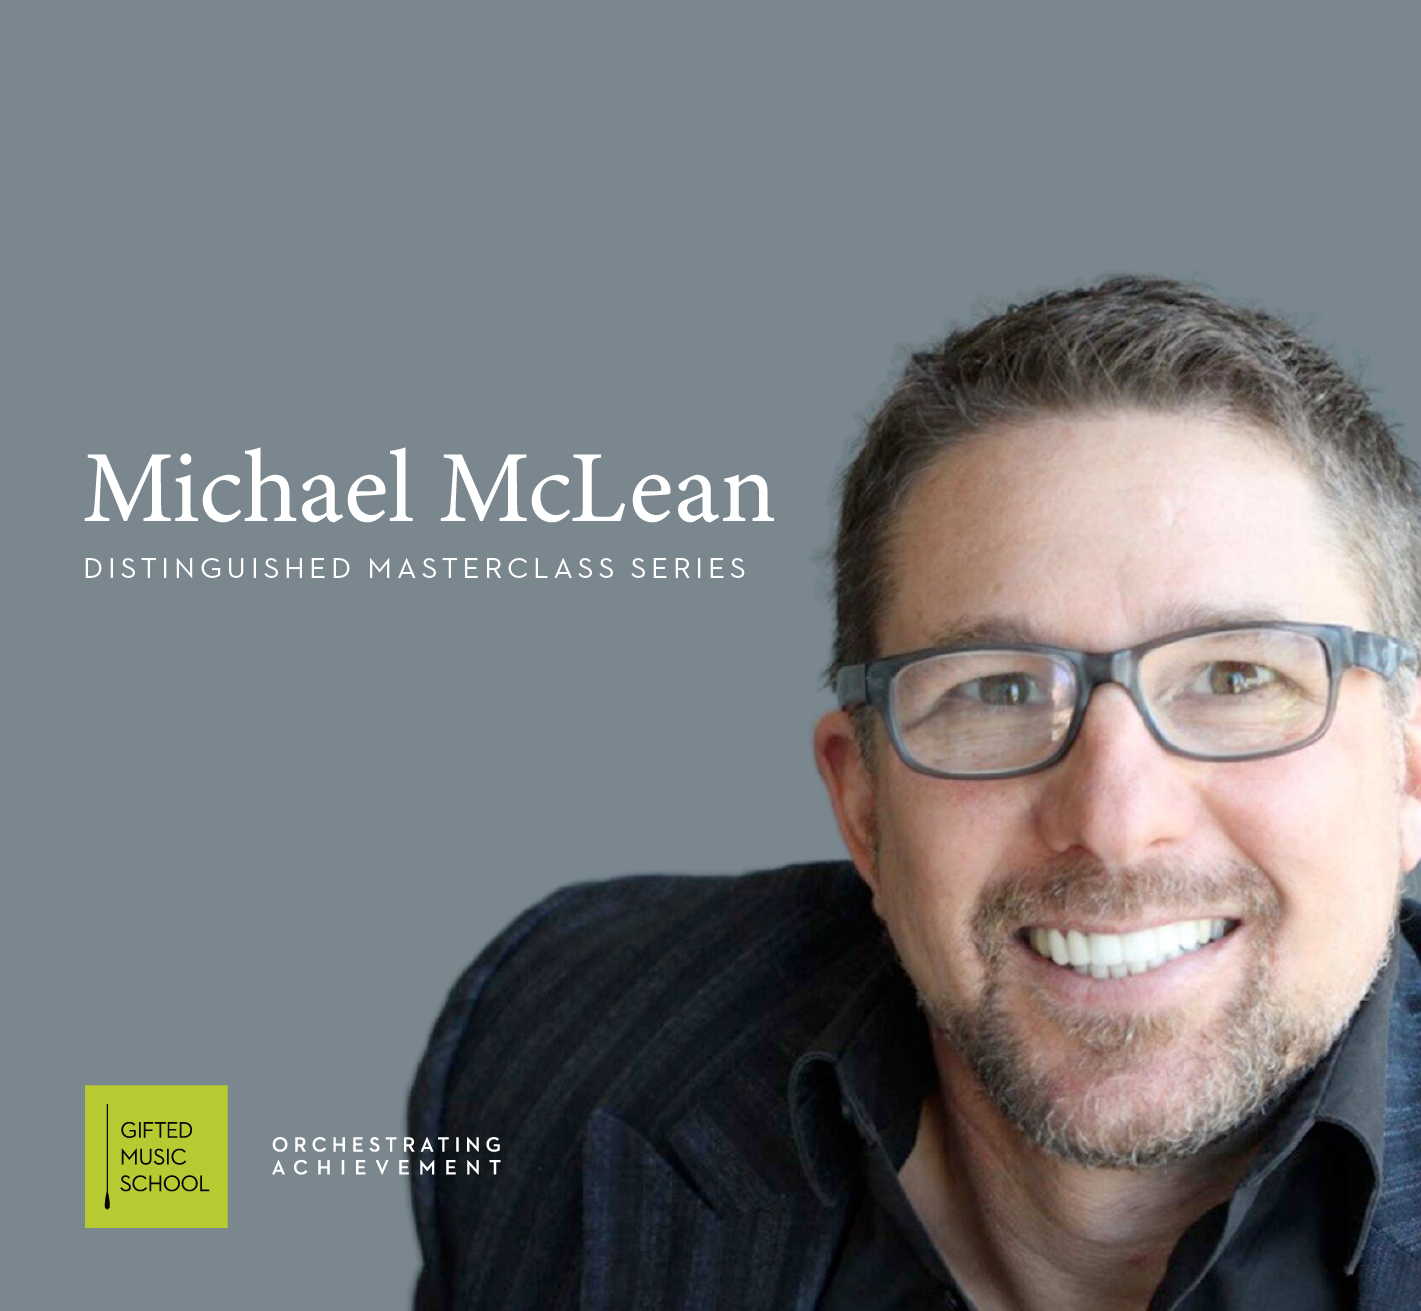 Michael McLean violin masterclass header image